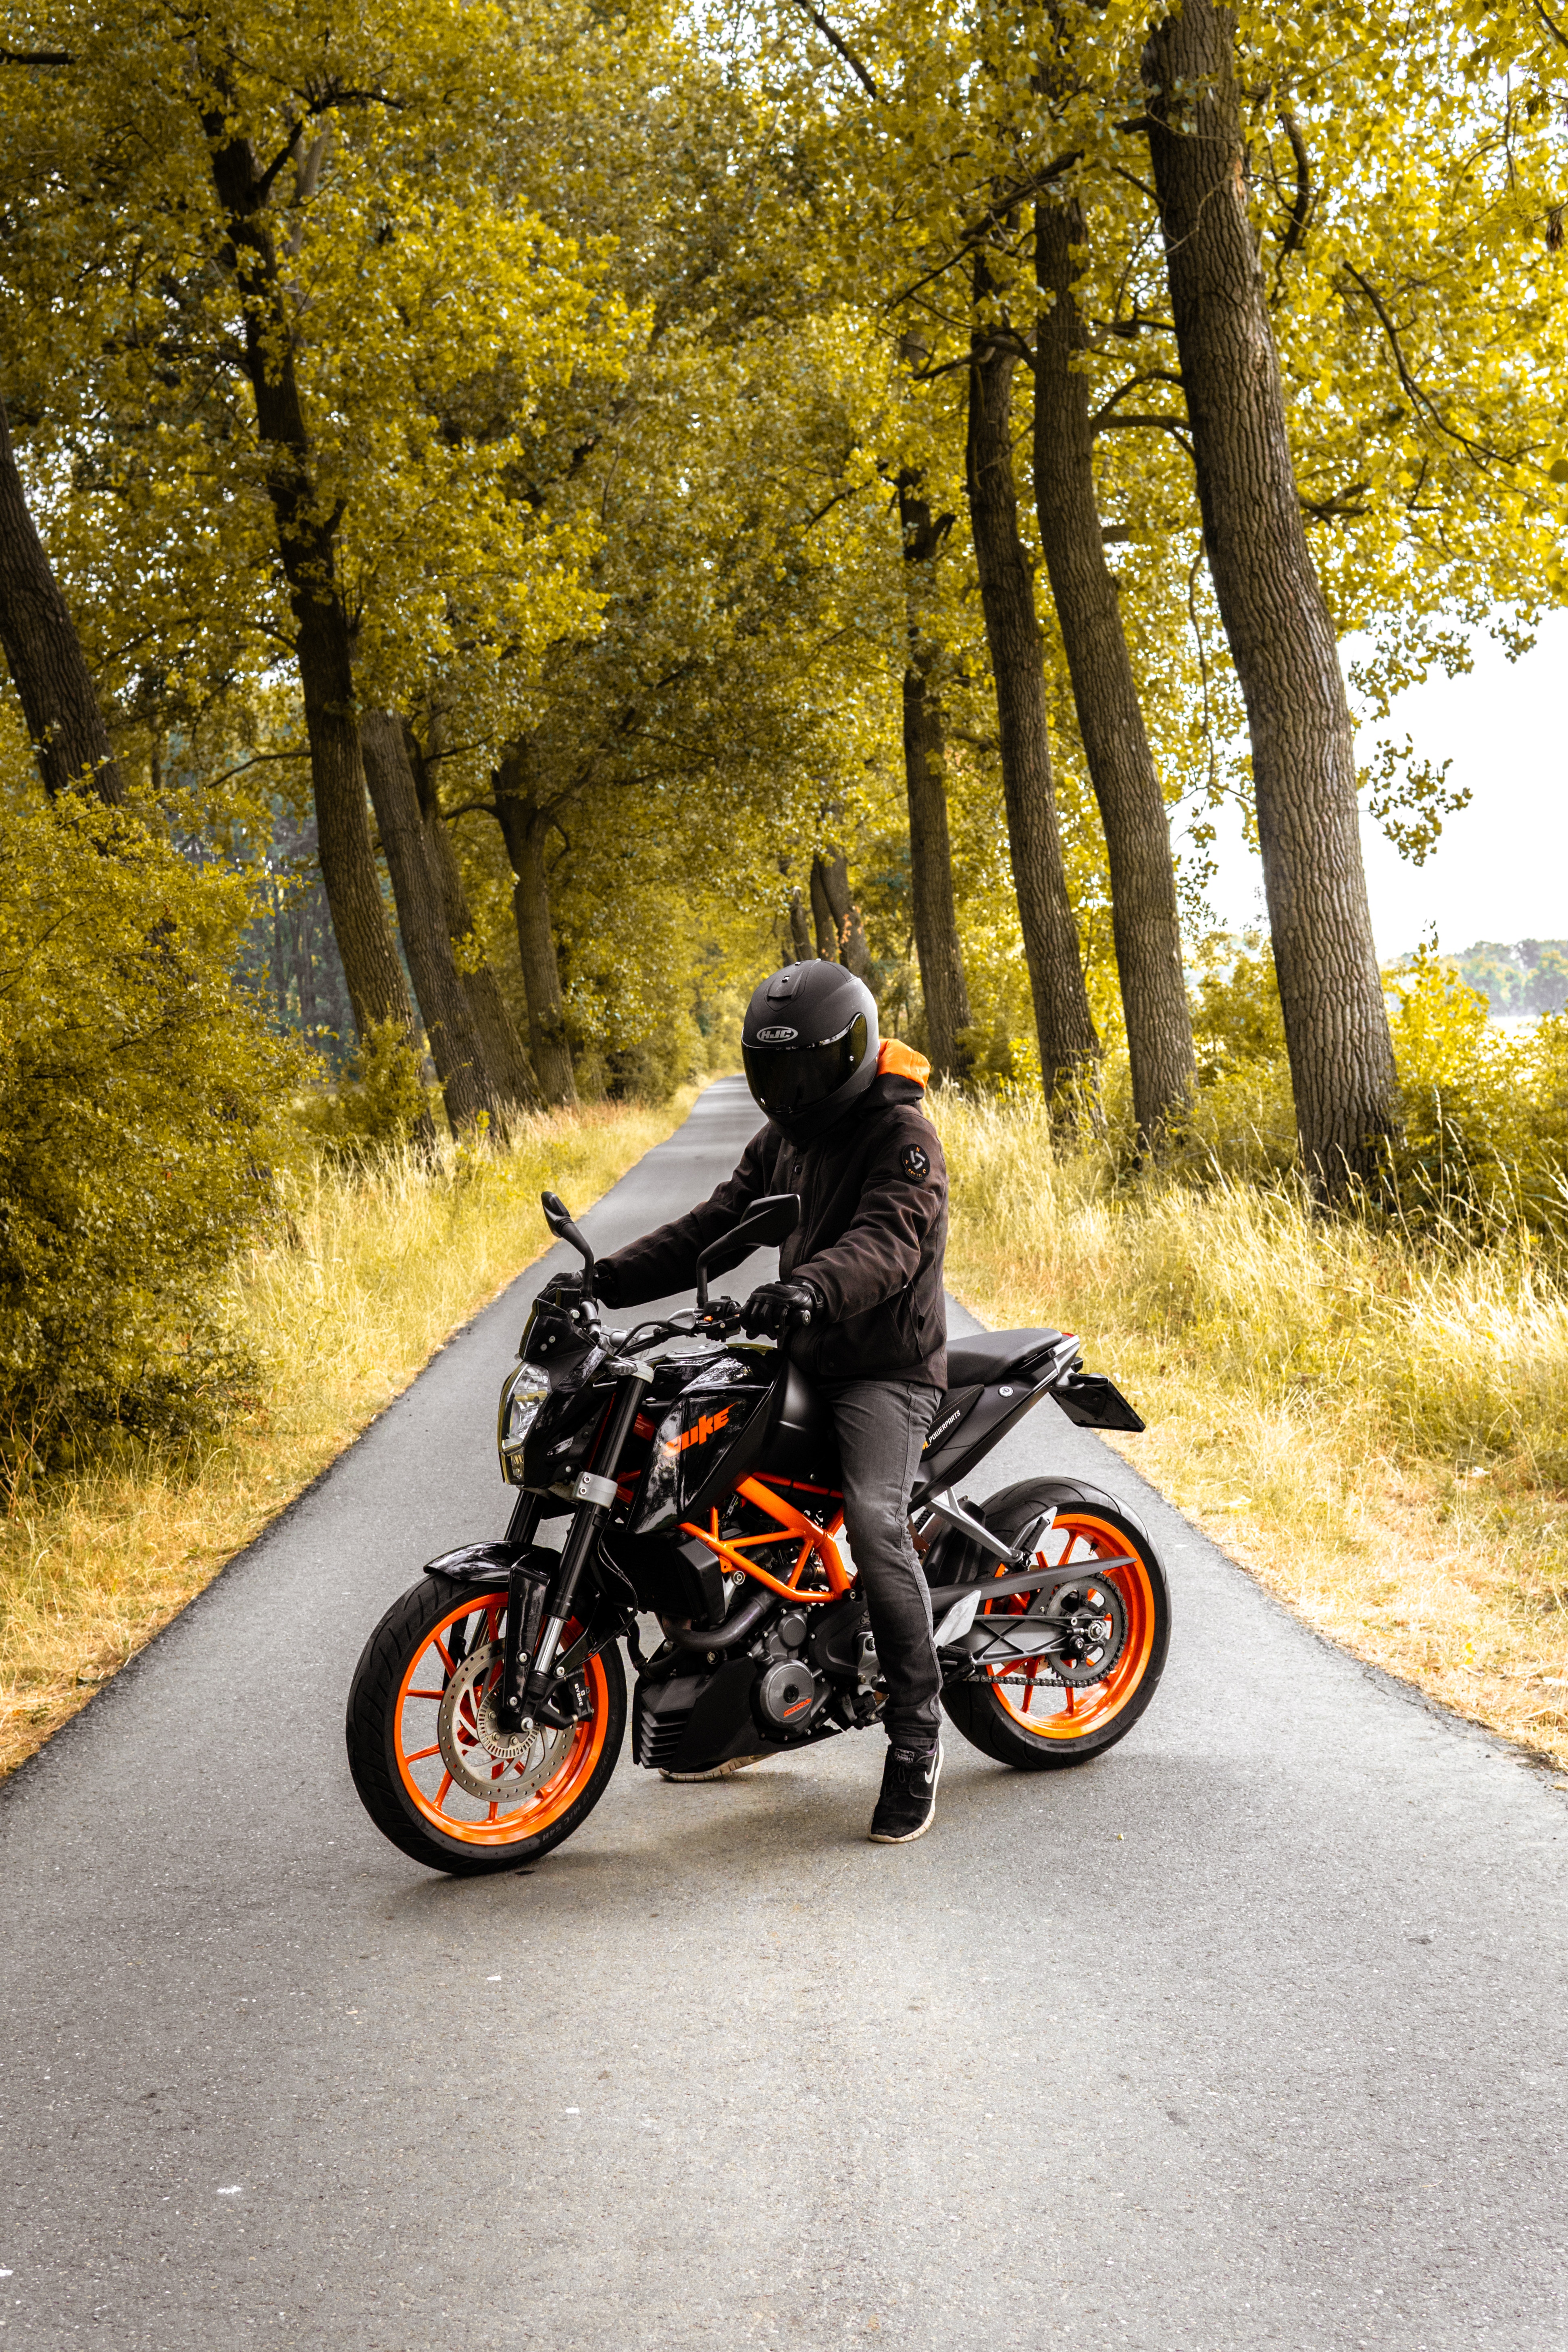 Motorcycle motorcyclist, motorcycles, road, helmet Free Stock Photos